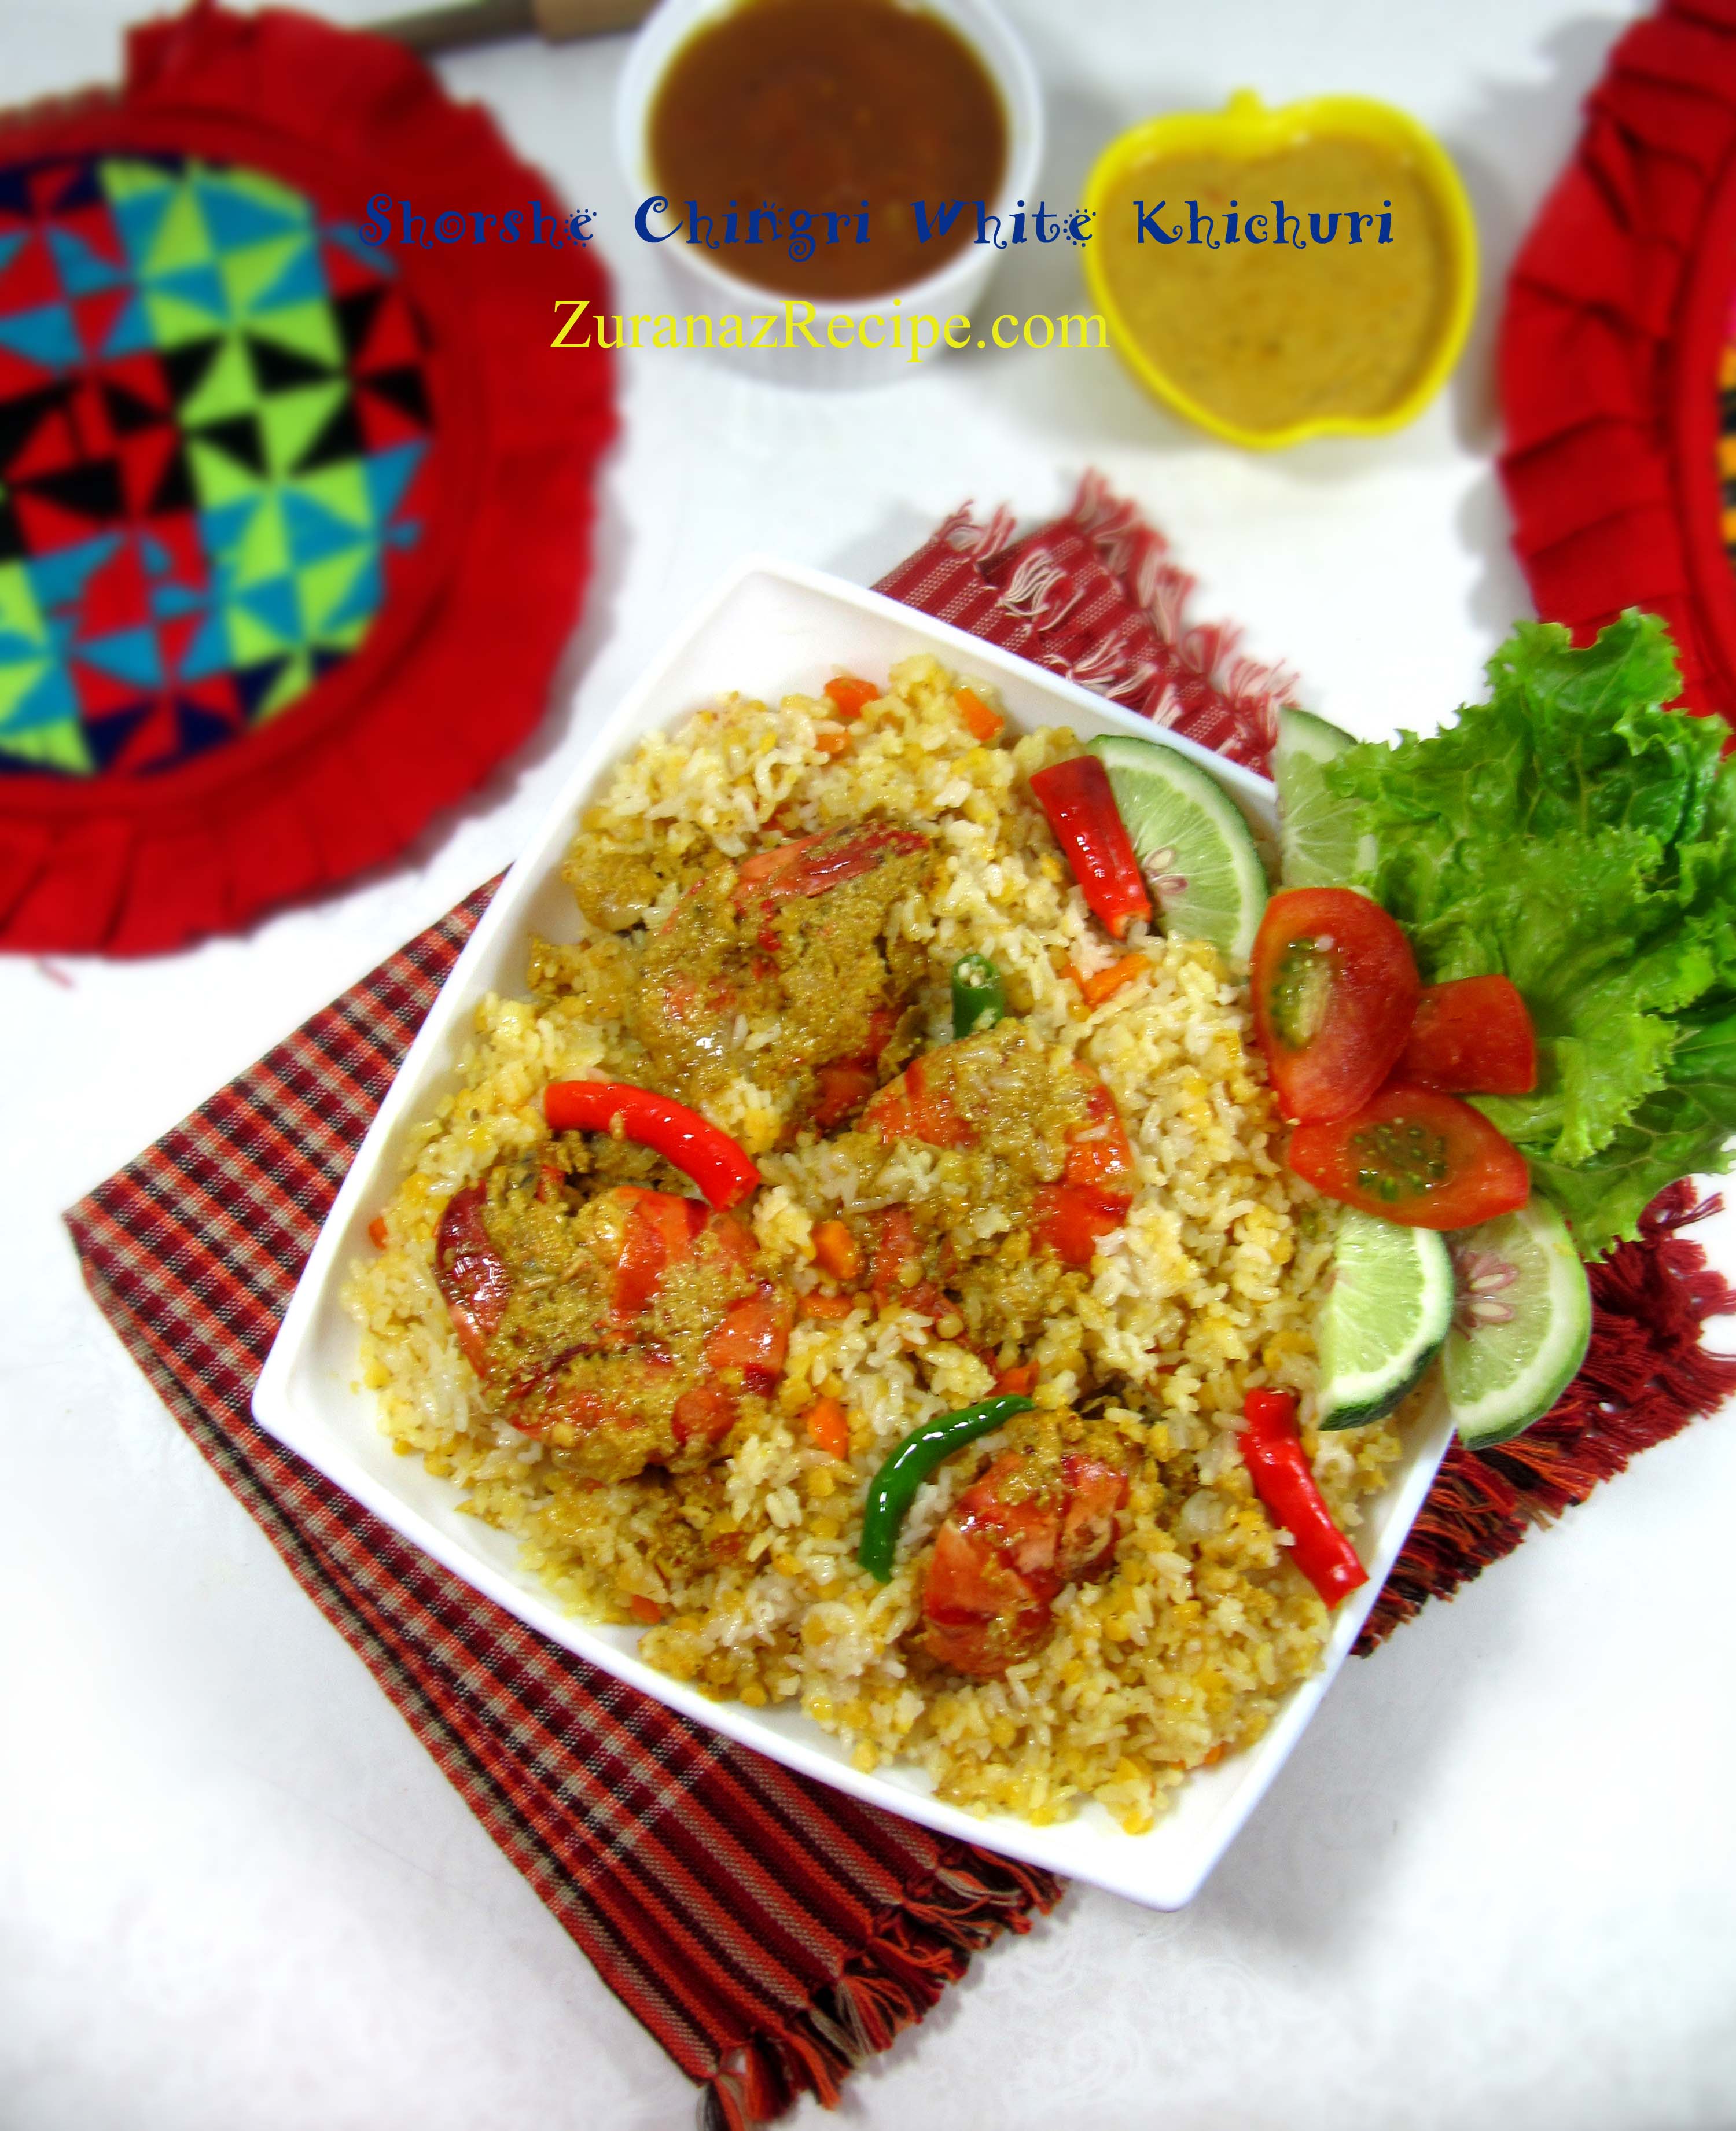 Shorshe-Chingri White Khichuri/Mustard-Prawn-Lentil Rice